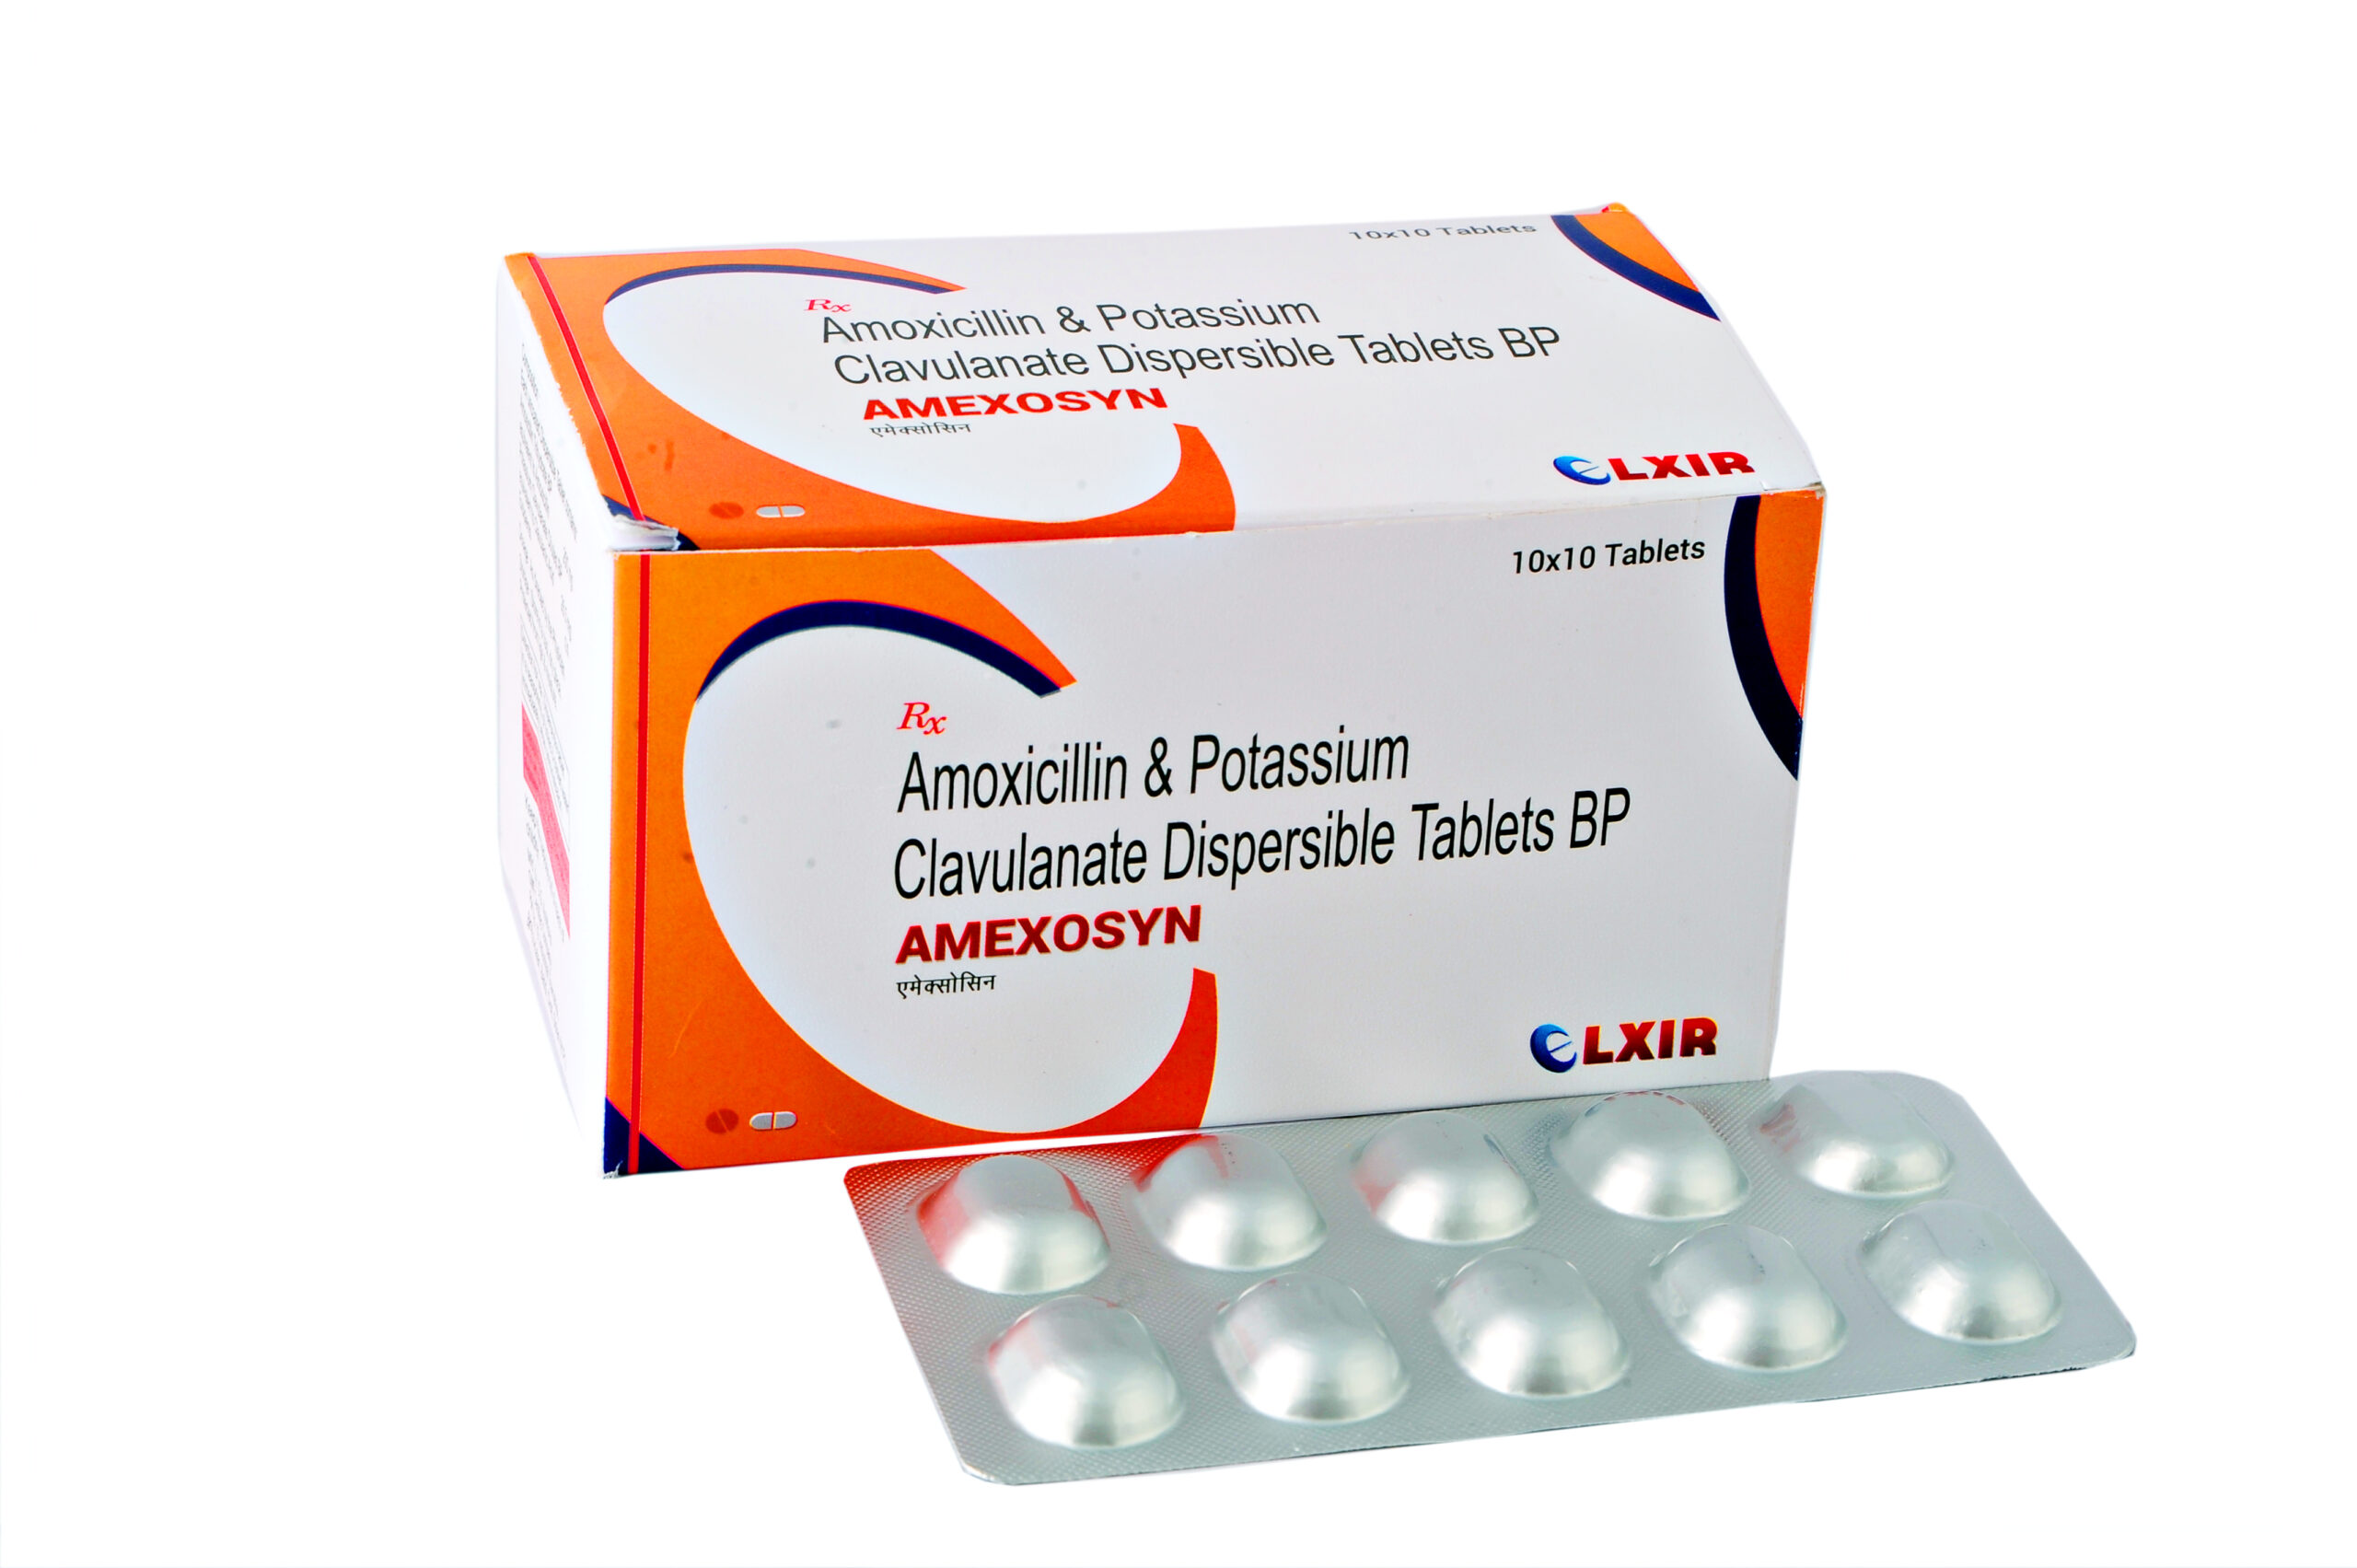 Amoxycillin 200mg + Clavulanic Acid 28.5mg - AMEXOSYN-KID